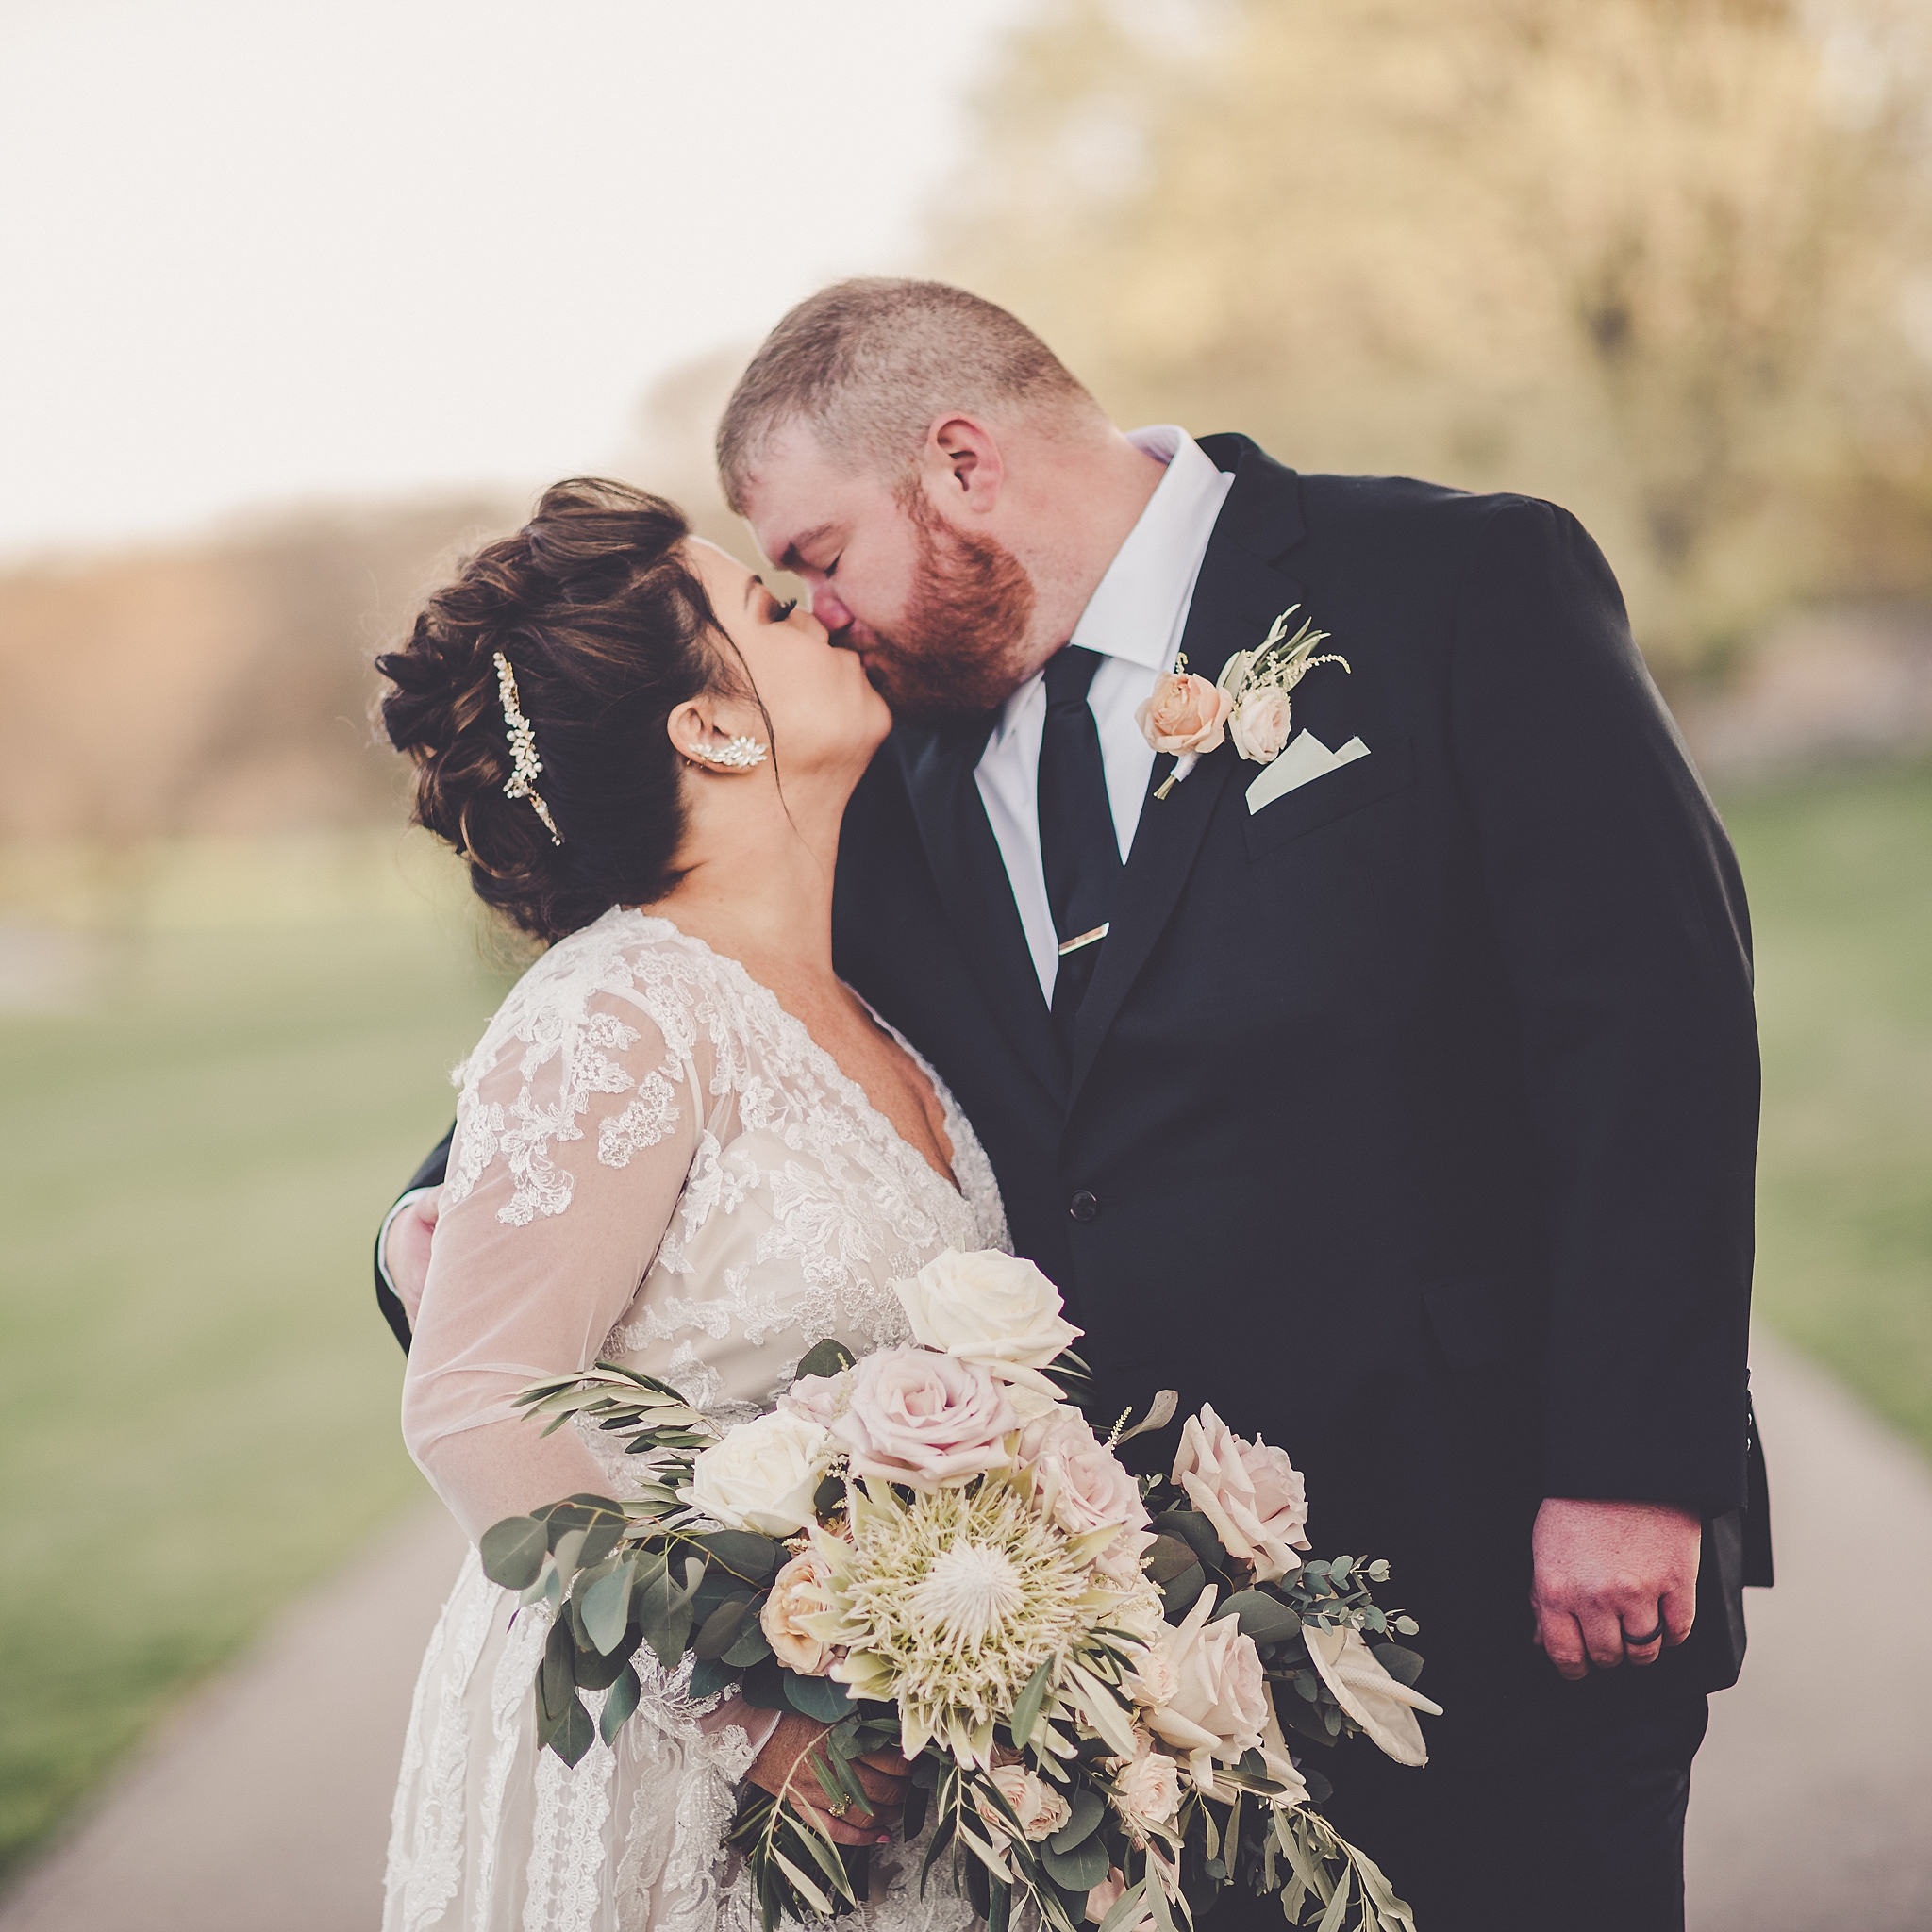 Chicagoland wedding photographer Kara Evans Photographer's top blog posts of 2021 - photographer top blog posts of the year 2021.